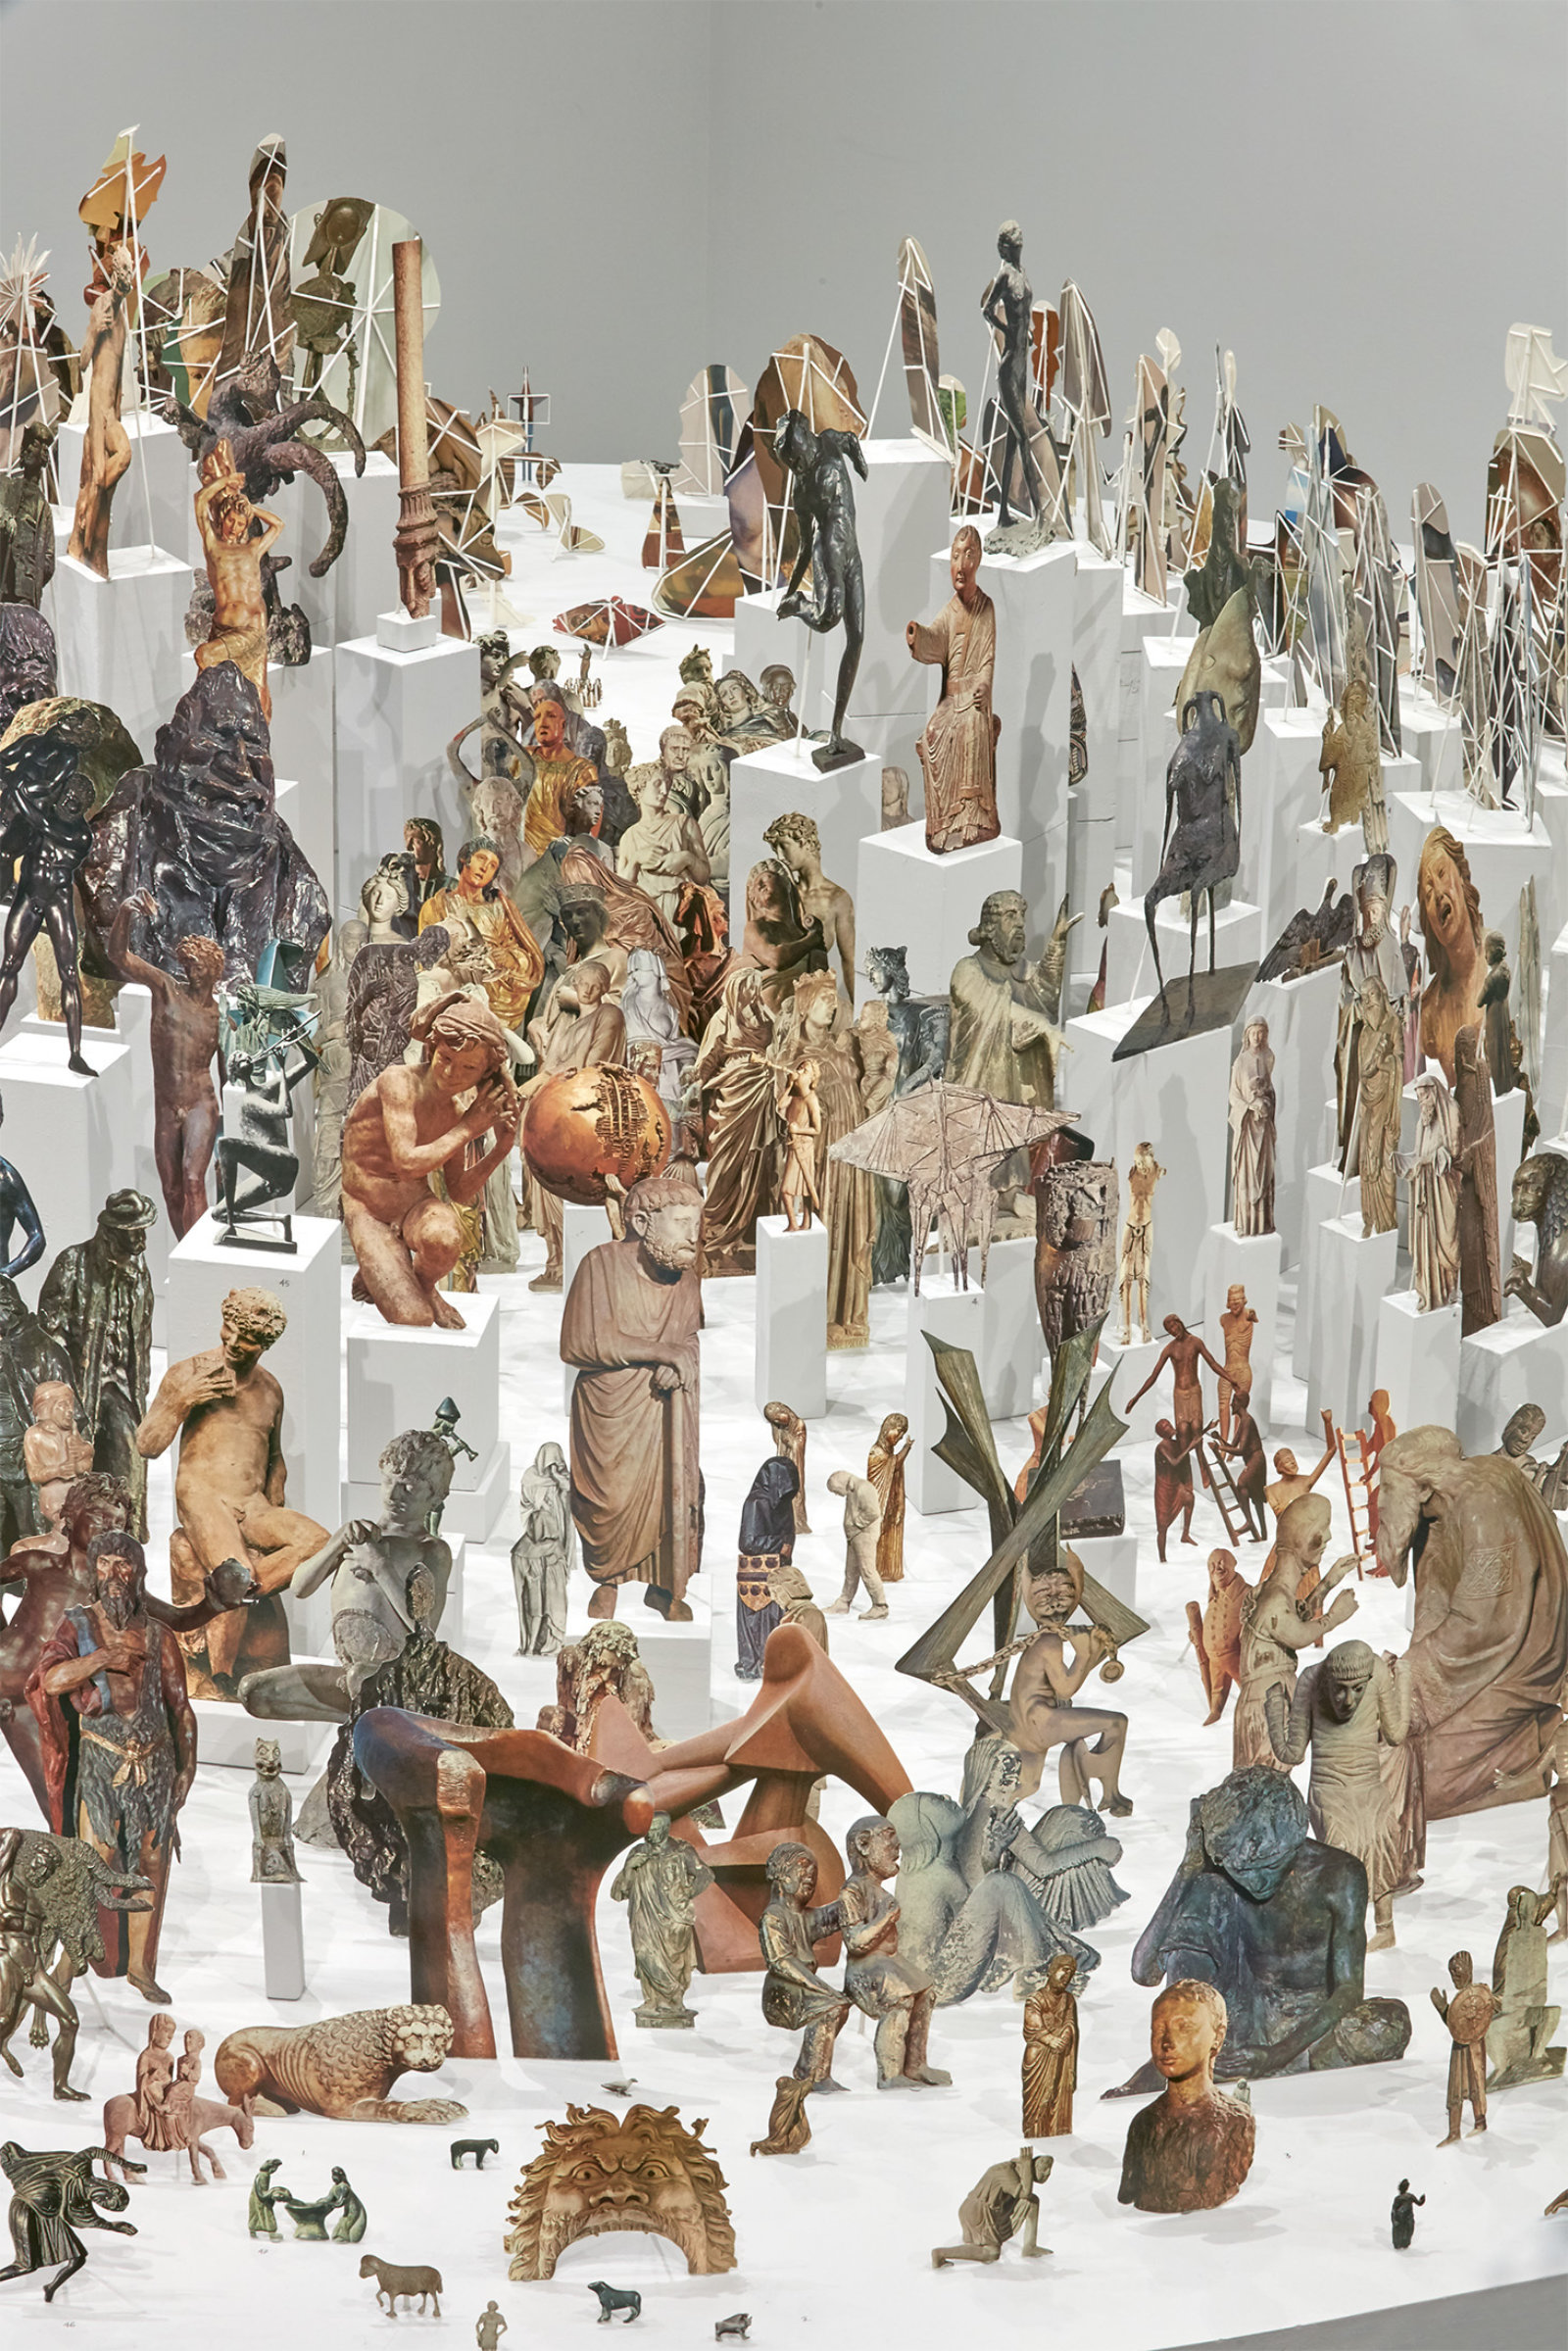 Geoffrey Farmer, Boneyard (detail), 2013, paper cutouts, wood, glue, dimensions variable. Installation view, ICA Boston, 2016